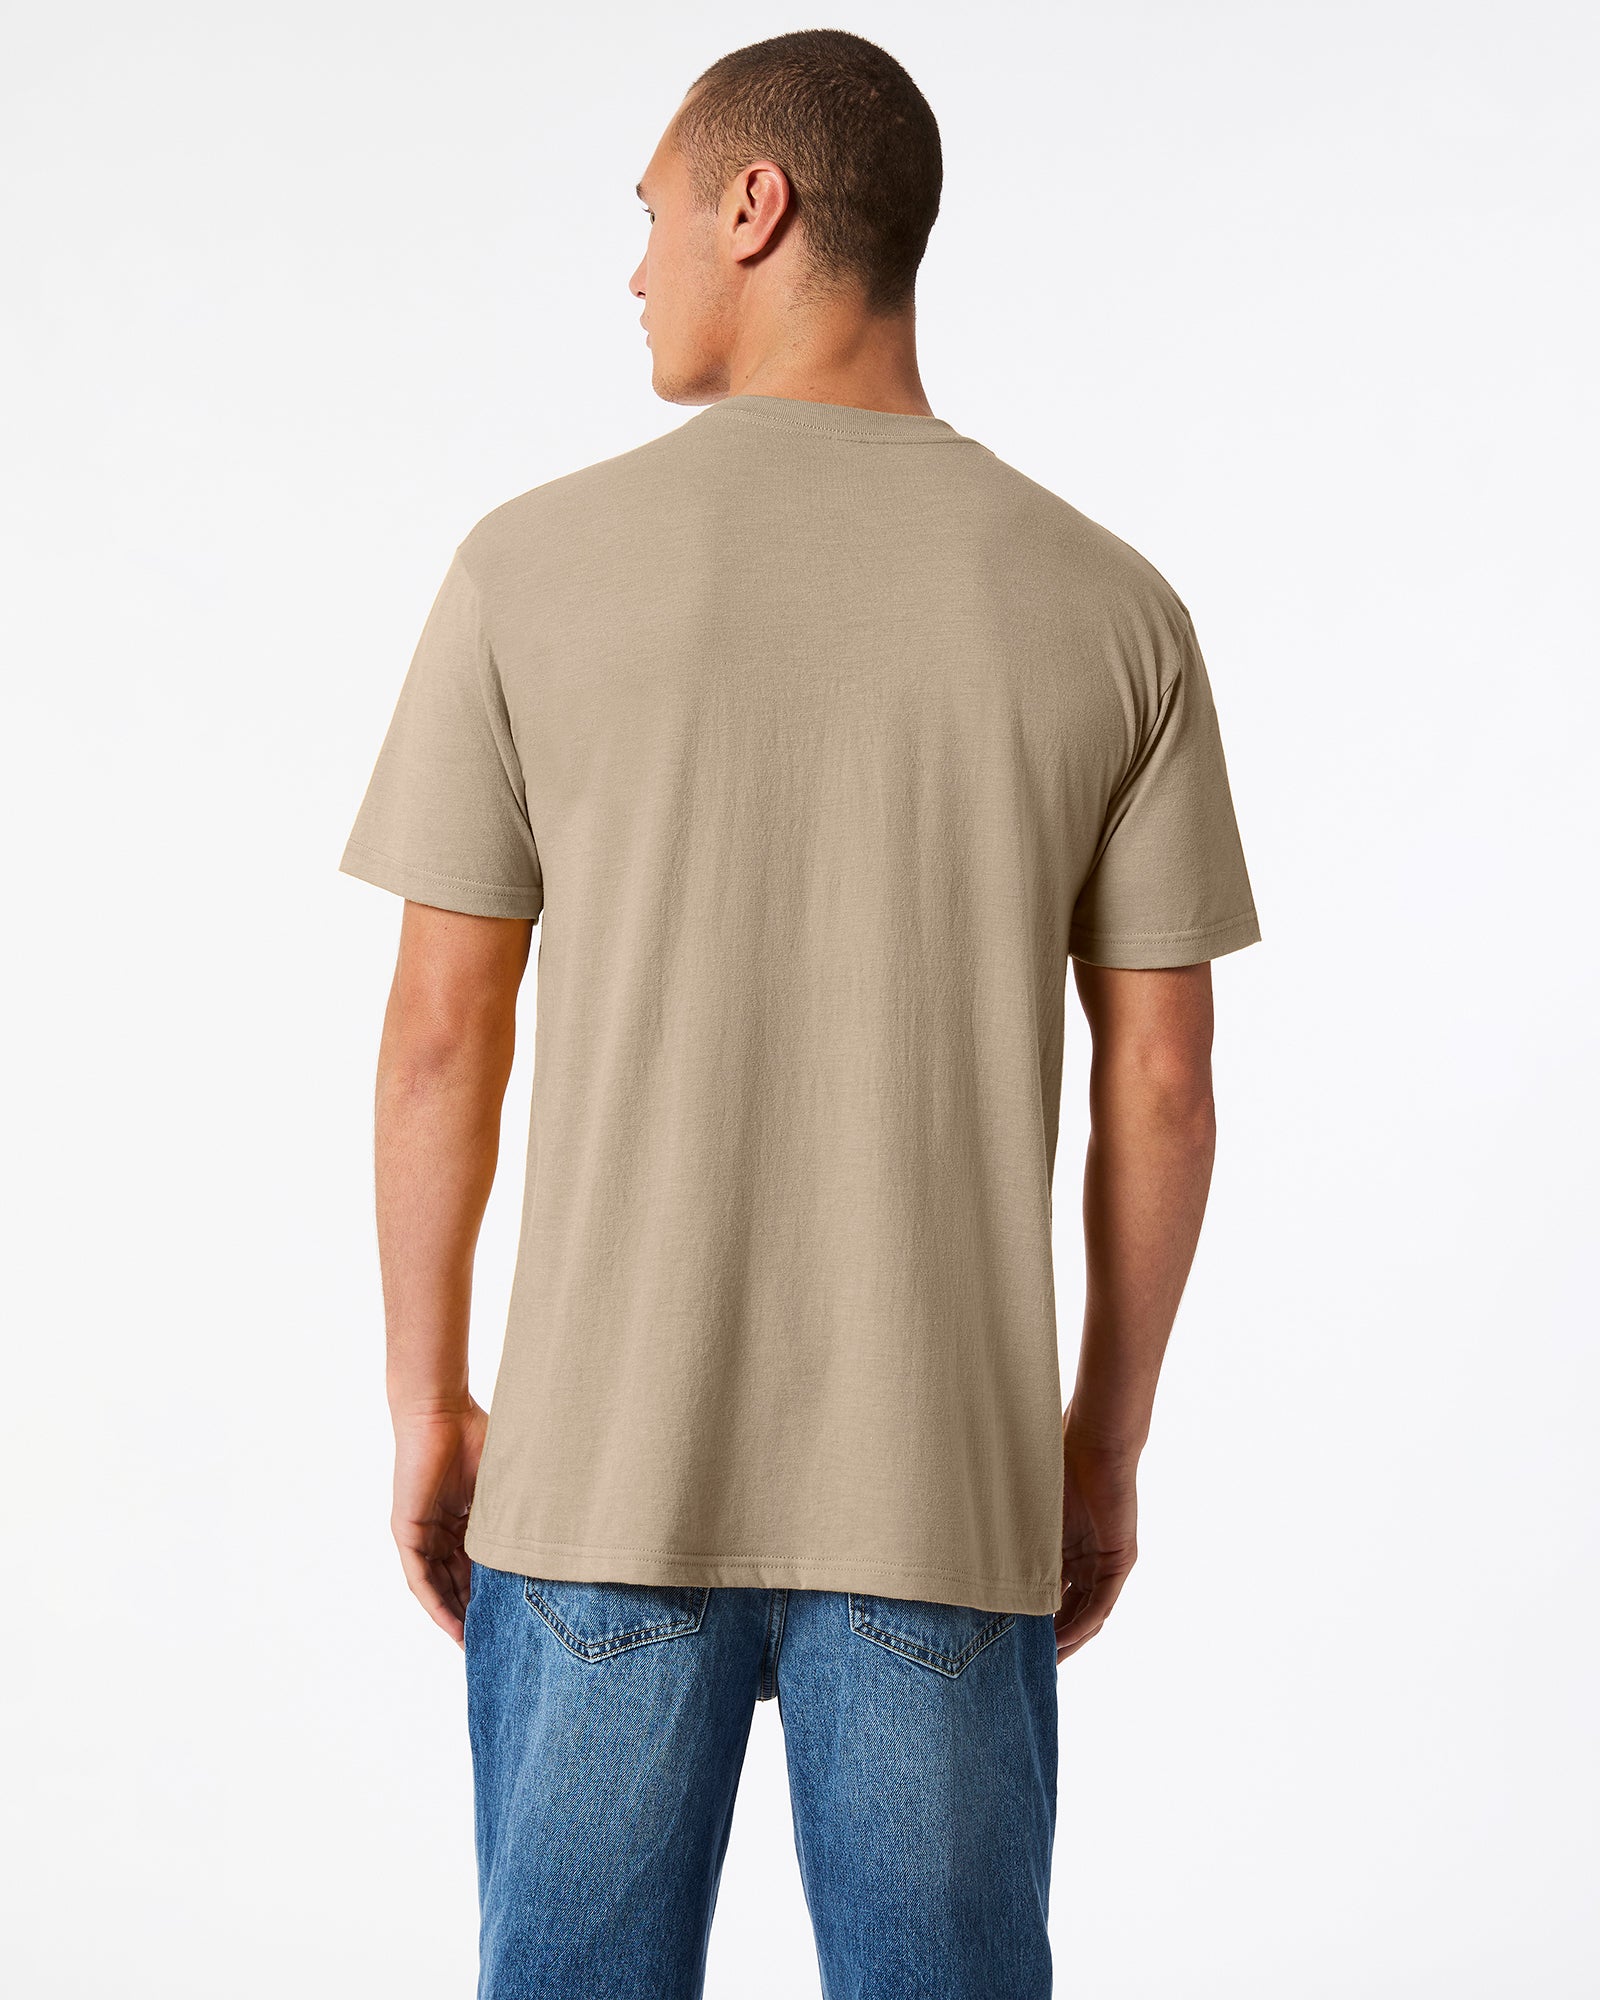 CVC Unisex Short Sleeve T-Shirt